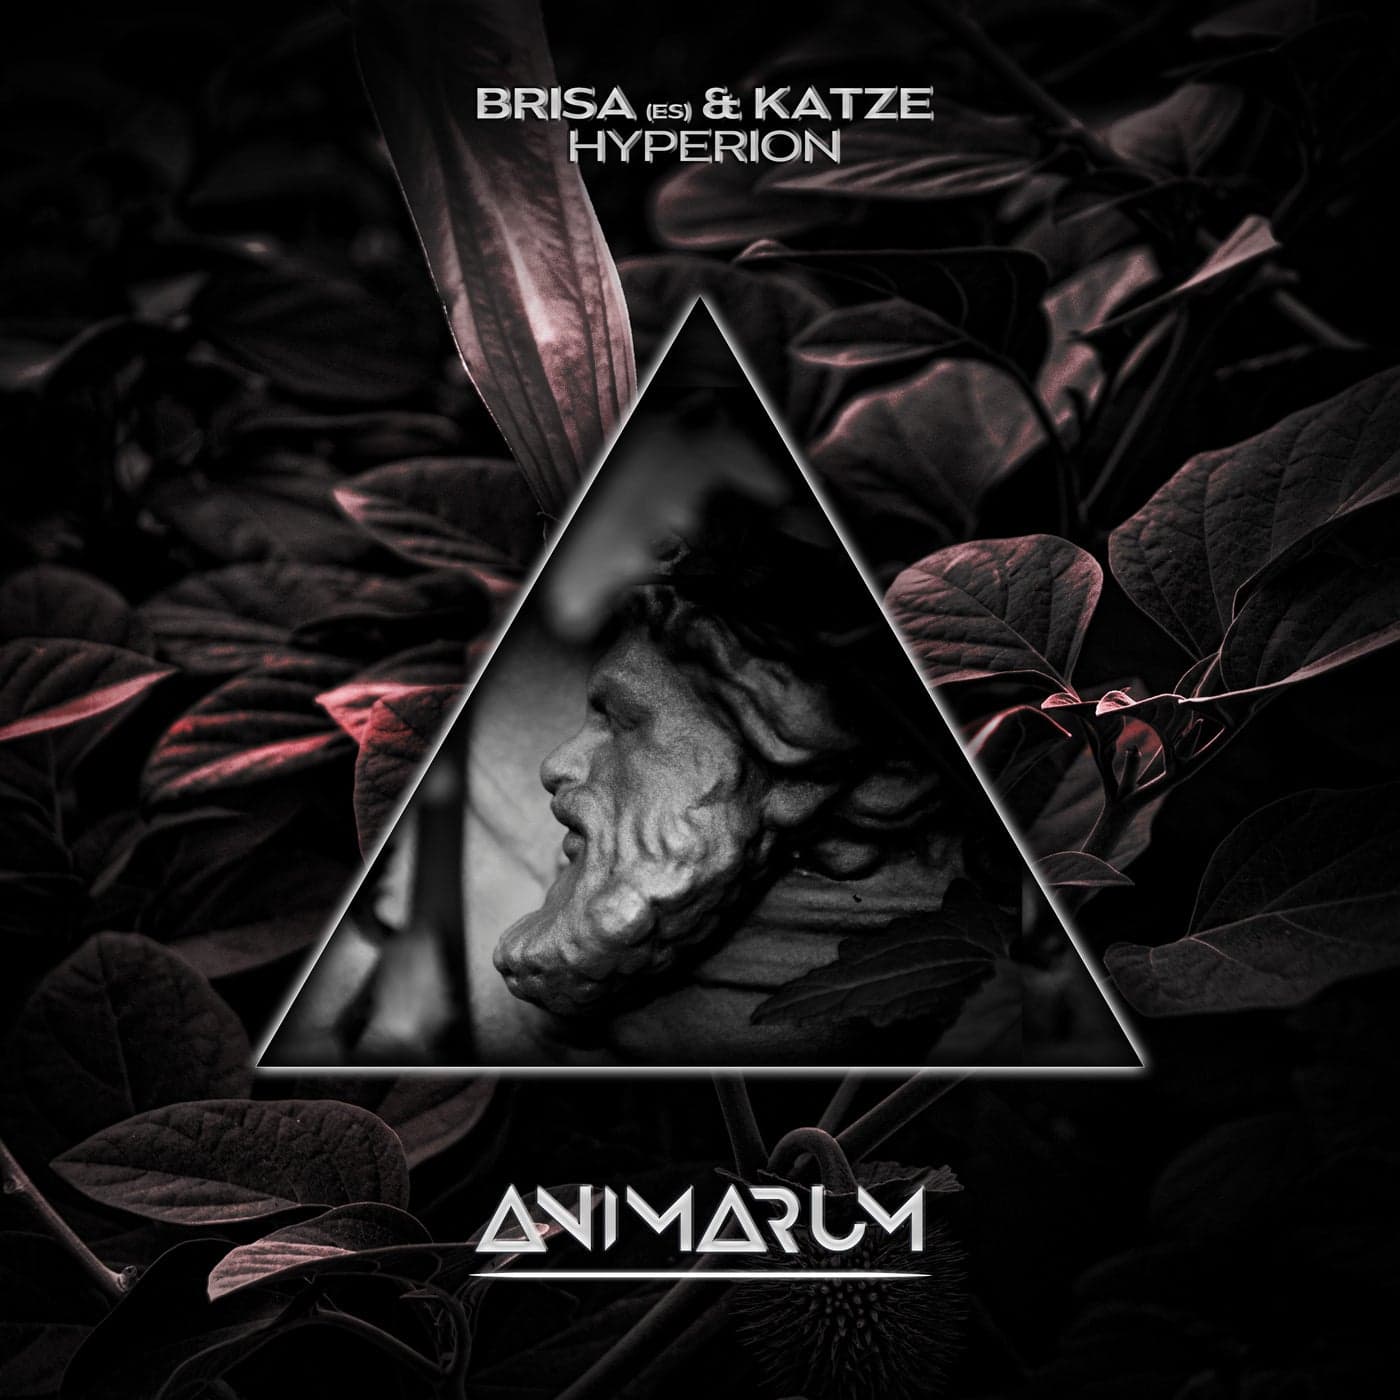 Download Katze, Brisa (ES) - Hyperion on Electrobuzz